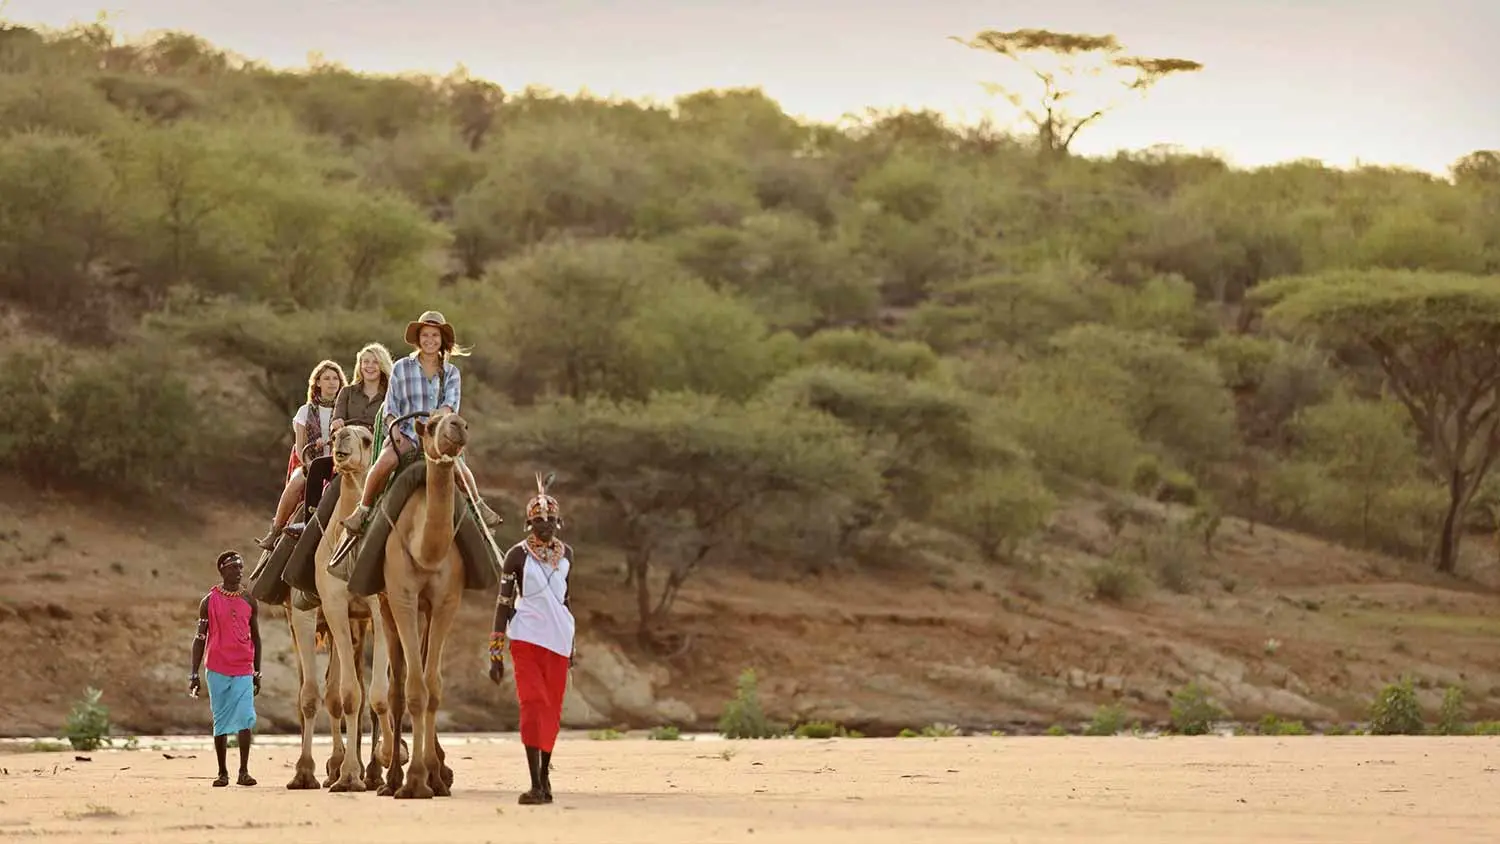 Top activities on Kenya lodge safaris - Camel riding at Saasab Samburu